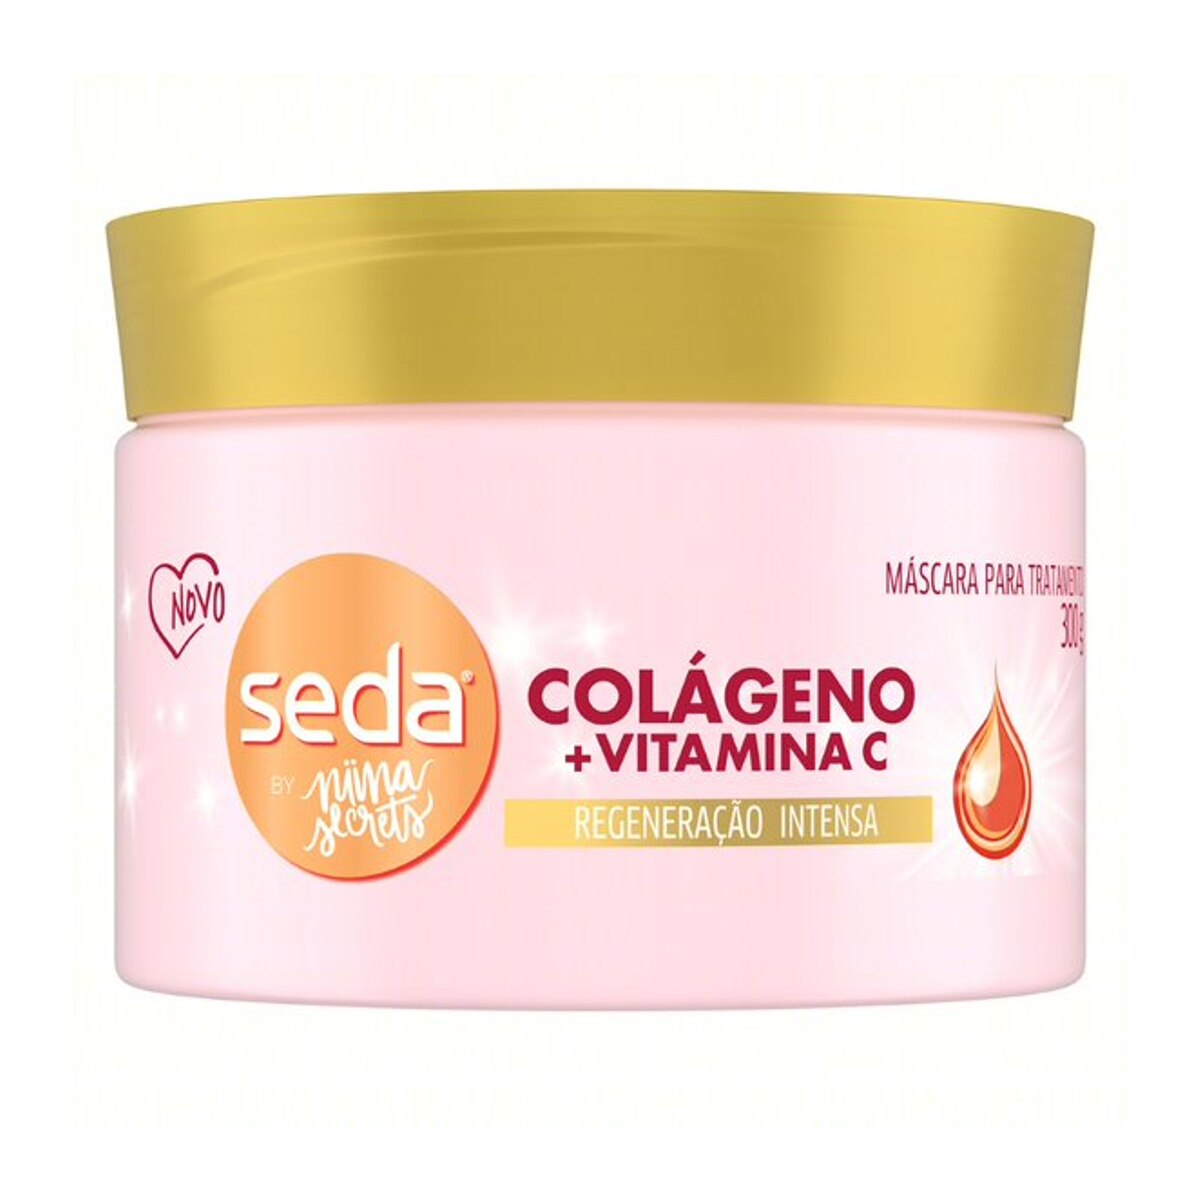 Mascara de Tratamento Seda by Niina Secrets Colageno + Vitamina C 300g